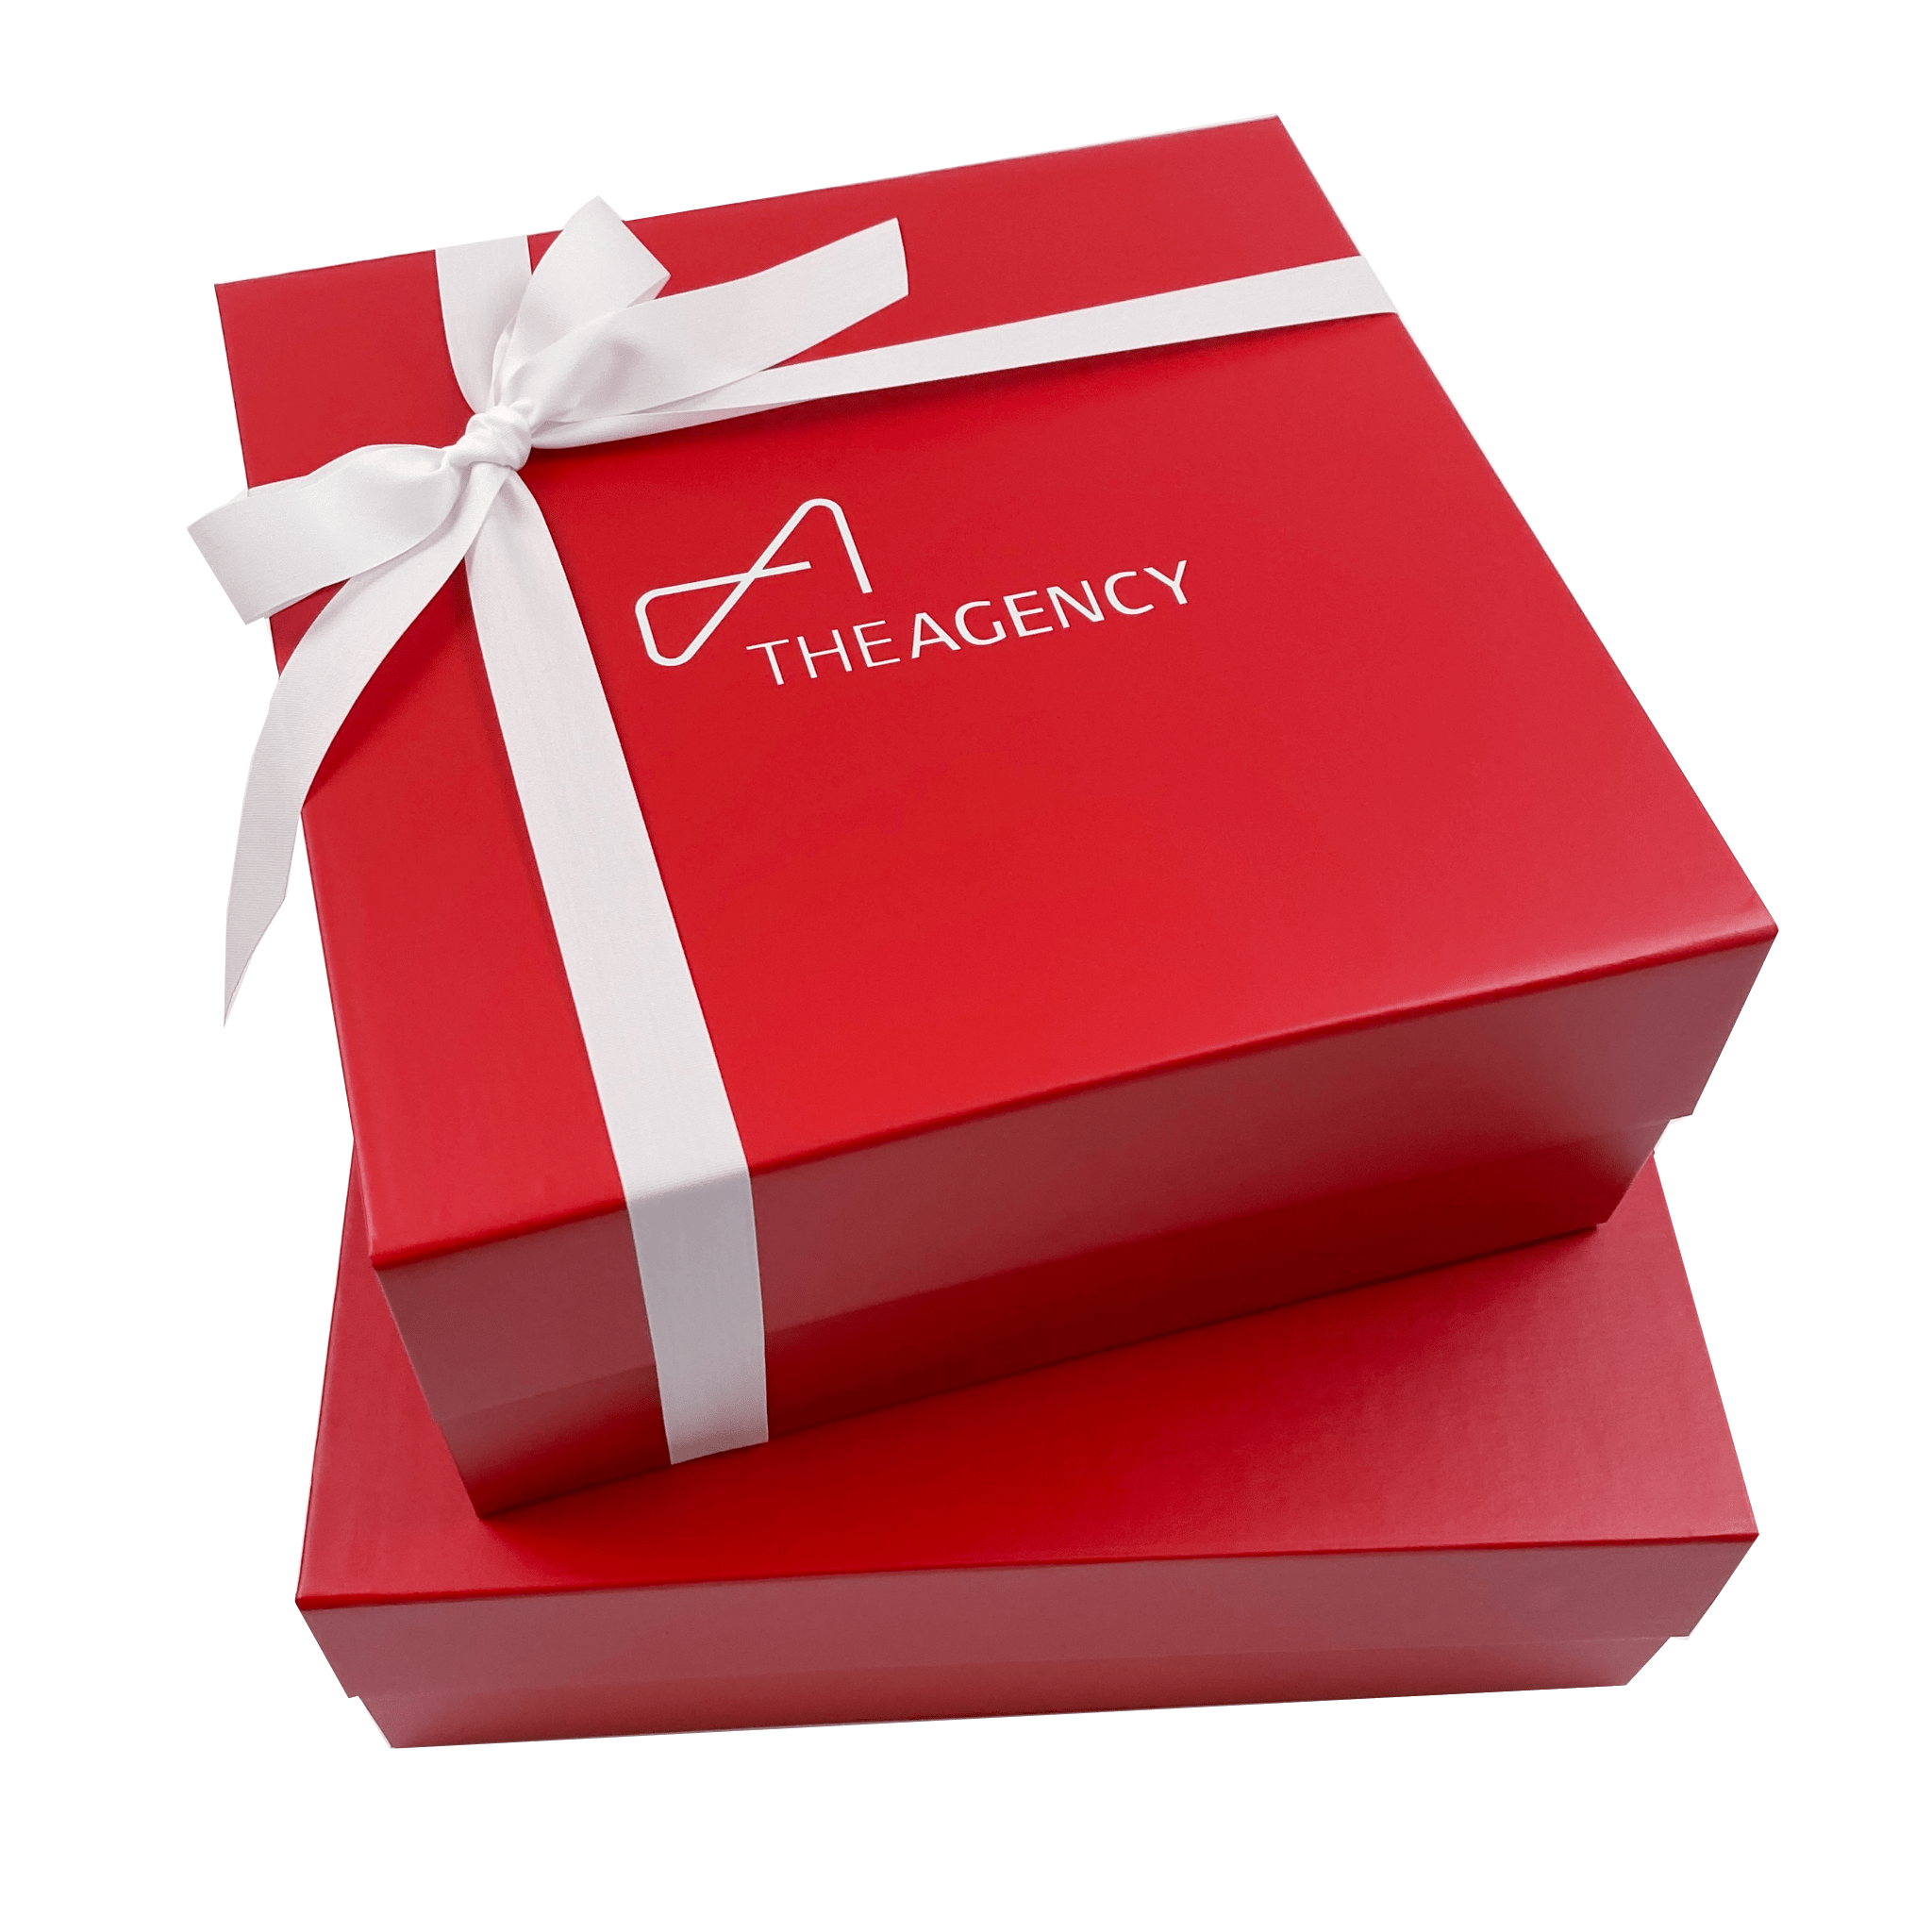 How to Enhance Your Branding with Custom Gift Box Designs - PakFactory Blog